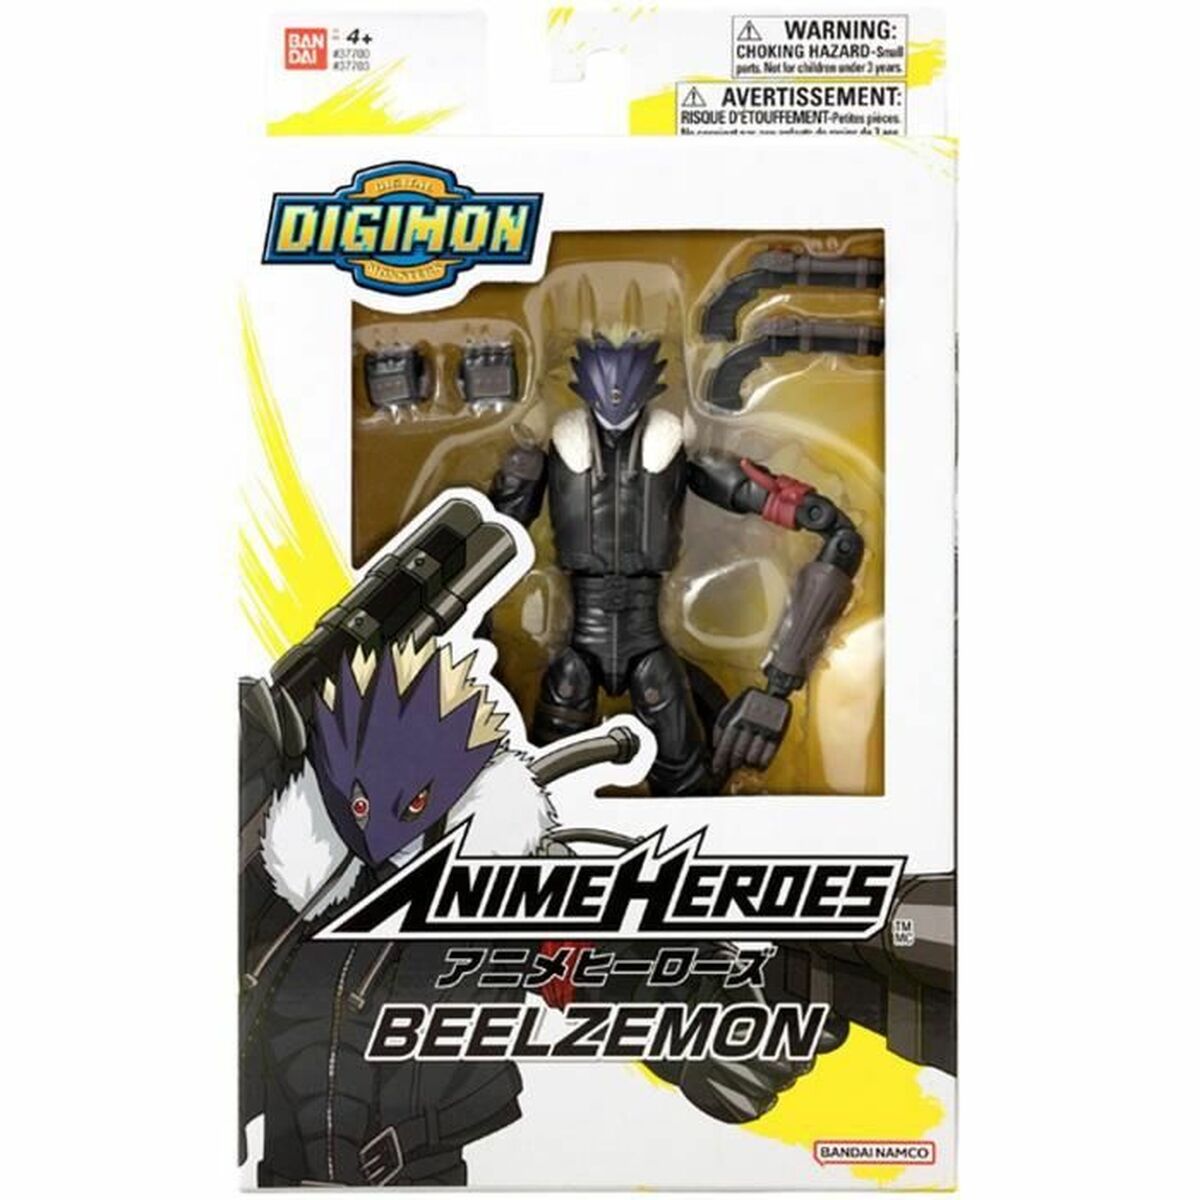 Personnage articulé Digimon Figurine - Beelzemon 17 cm Anime Heroes - Digimon - Jardin D'Eyden - jardindeyden.fr